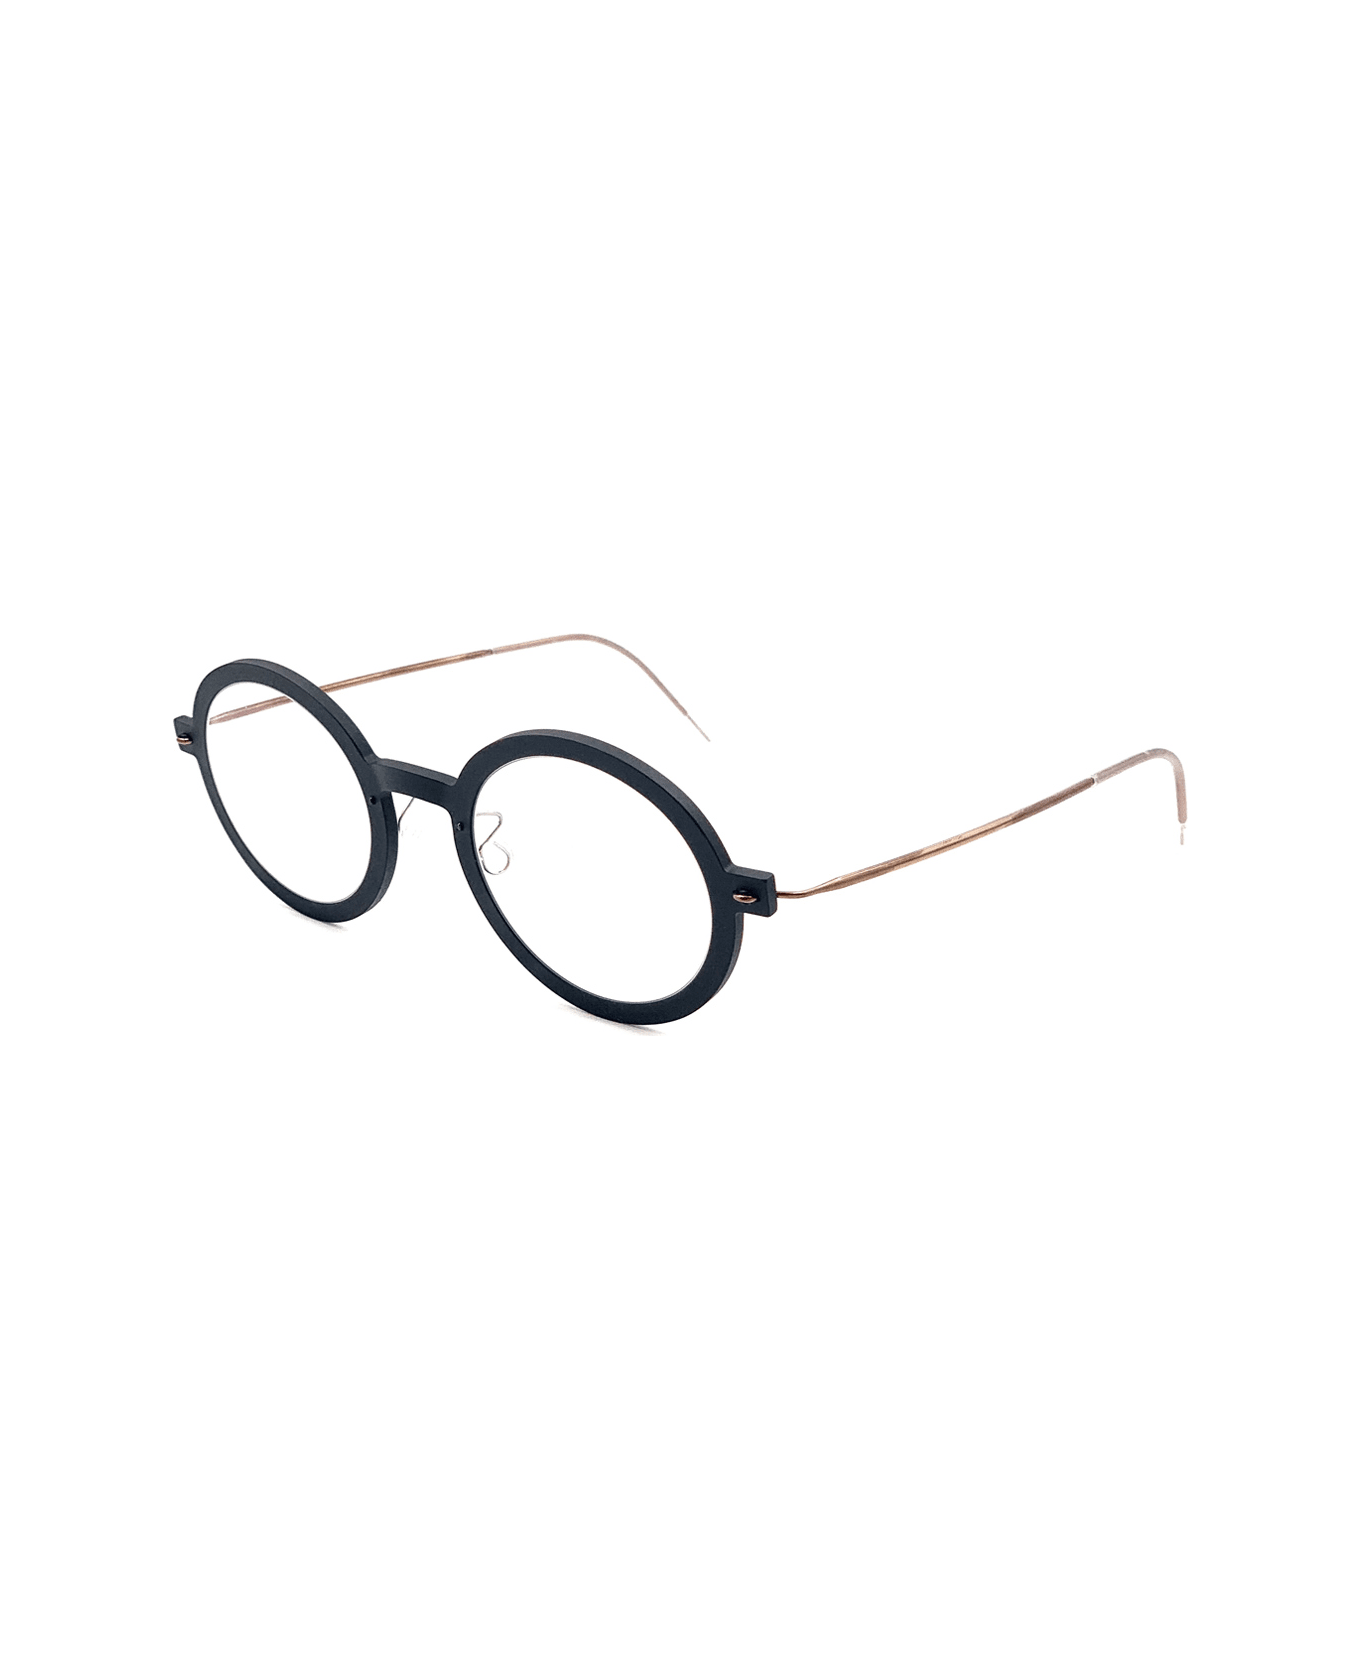 LINDBERG Now 6608 Glasses - Nero アイウェア